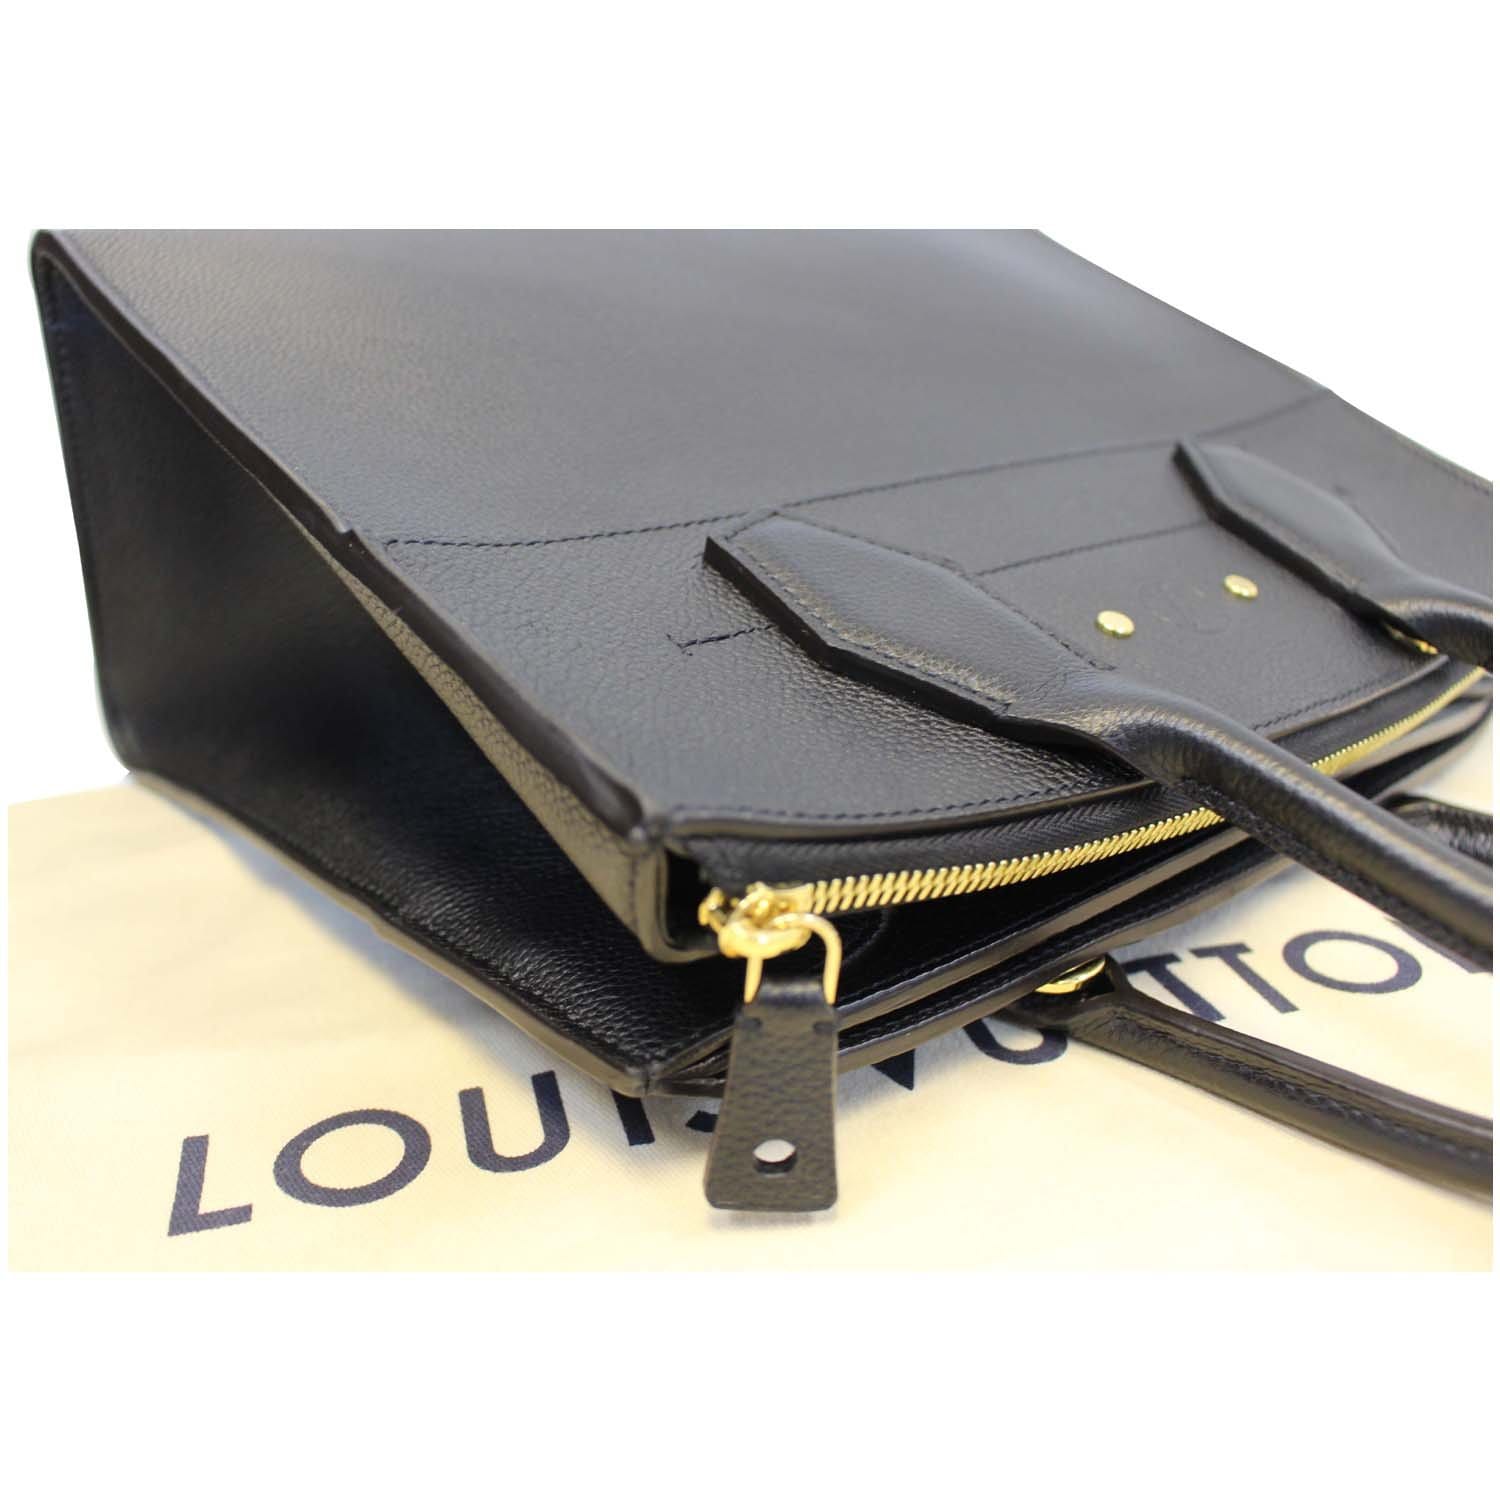 Louis Vuitton City Steamer Backpack Epi Leather Black 416041